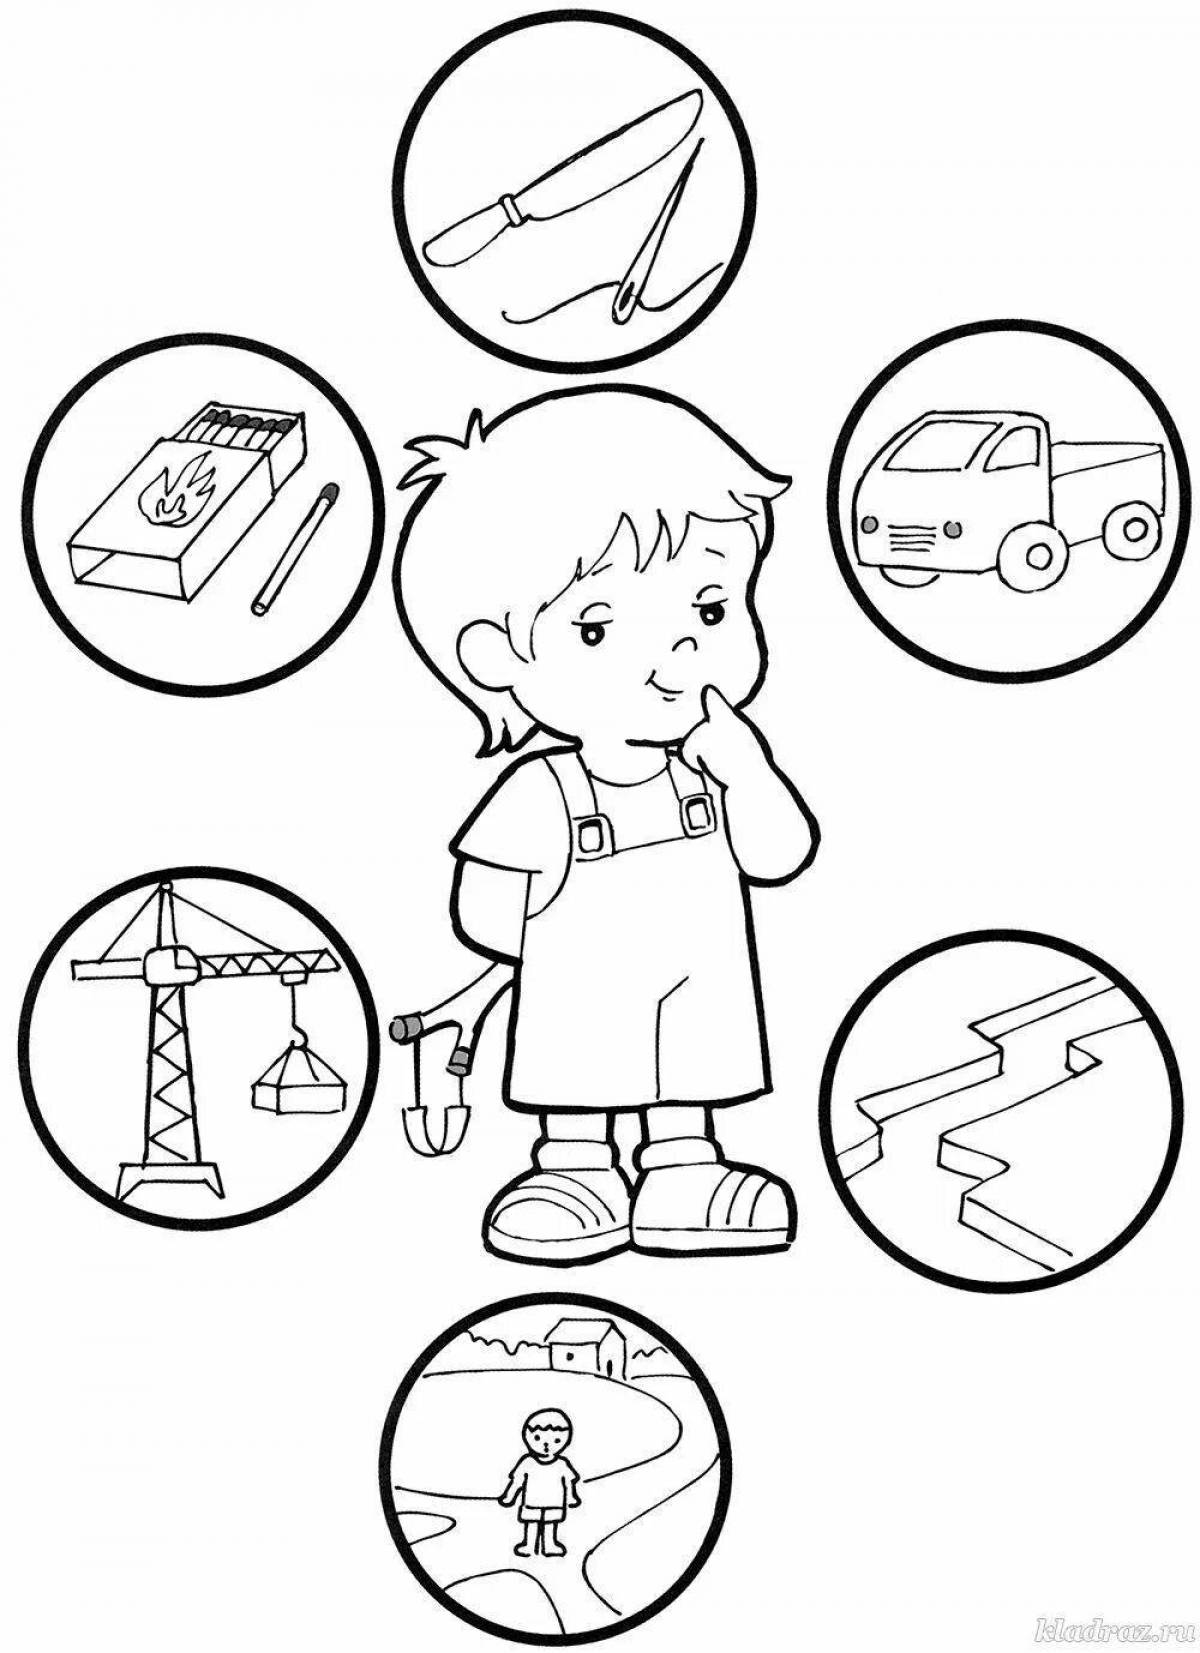 Rules of conduct in kindergarten #9